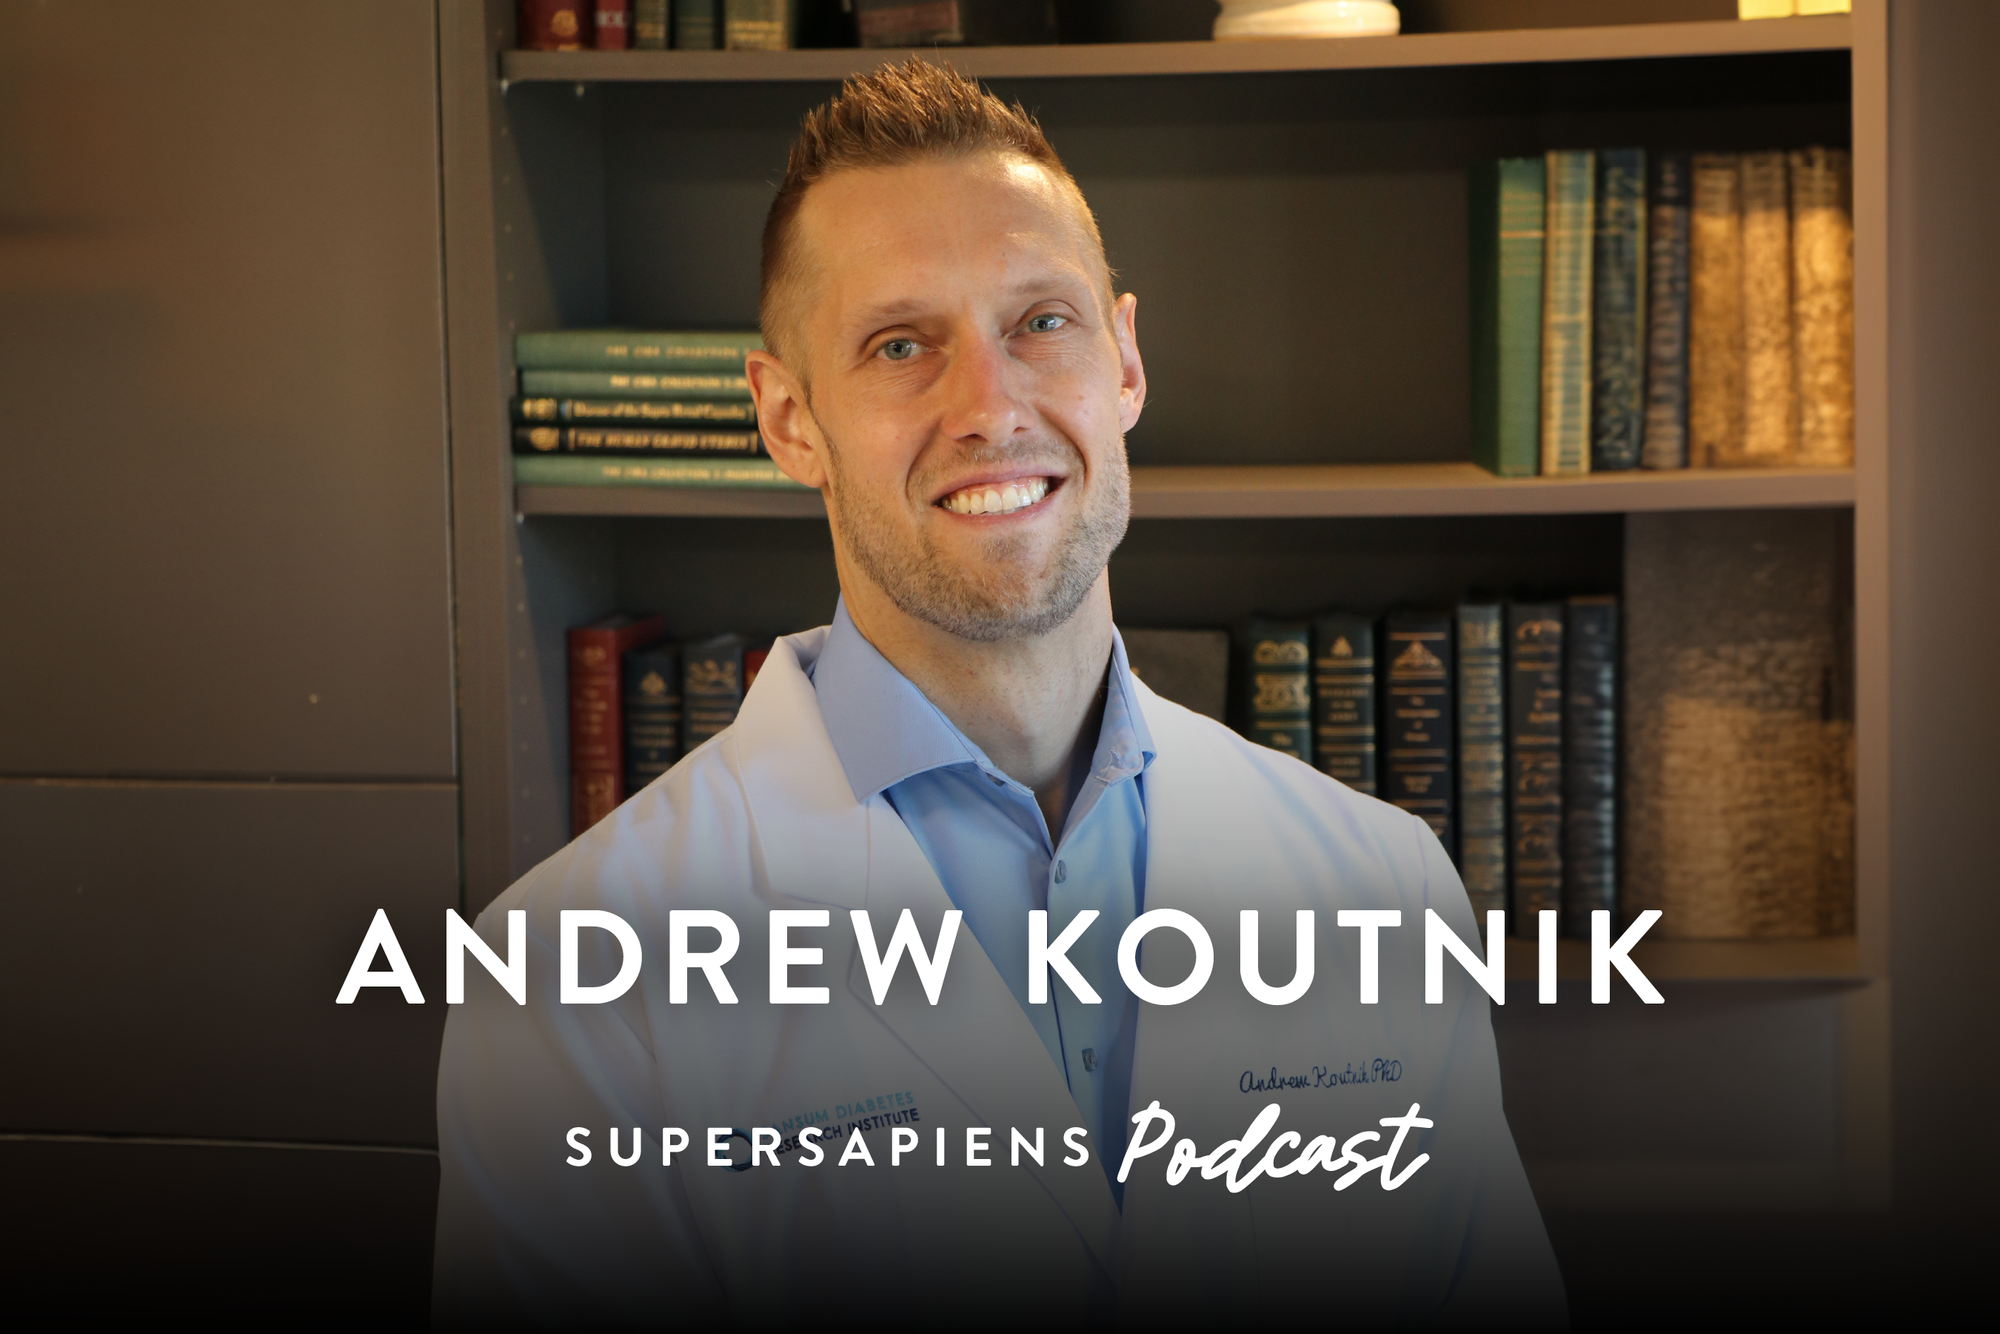 Andrew Koutnik Supersapiens